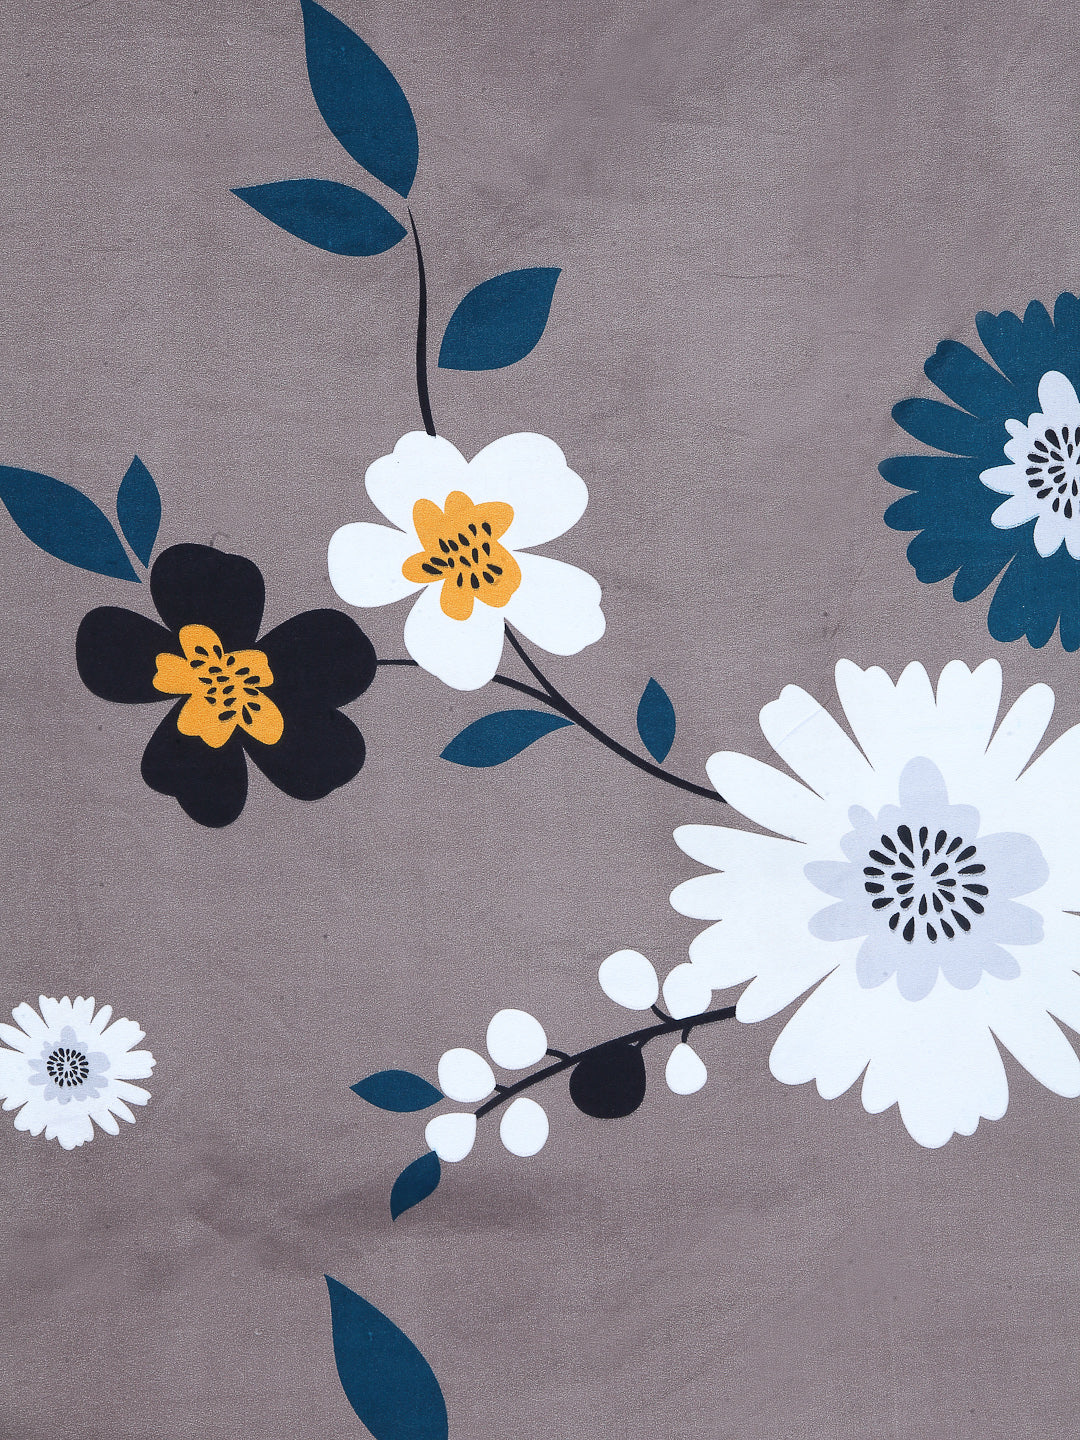 Arrabi Brown Floral TC Cotton Blend Single Size Bedsheet with 1 Pillow Cover (220 x 150 cm)